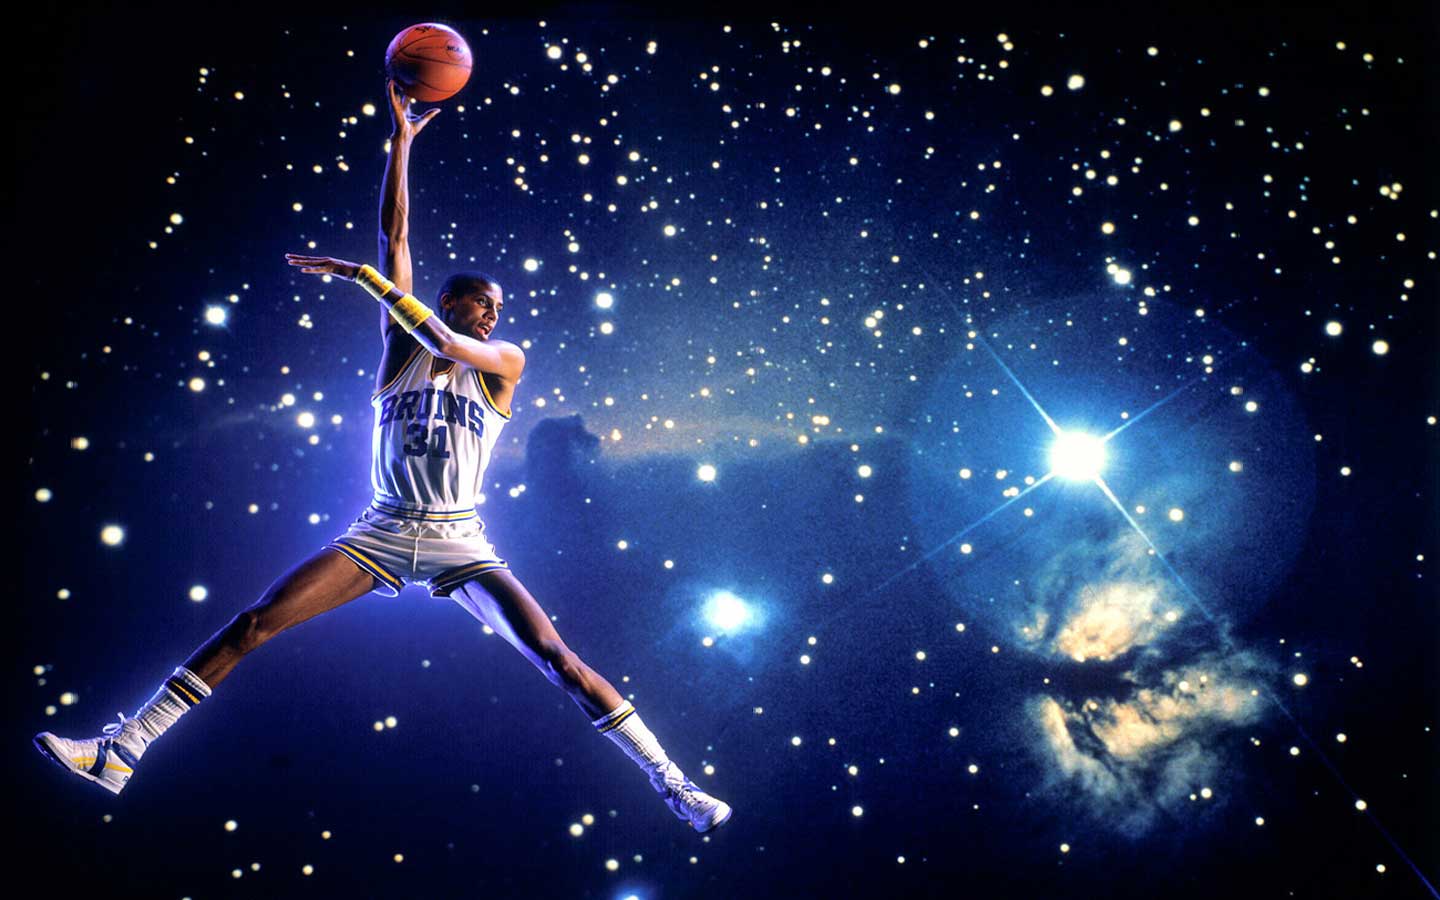 Reggie Miller Basketball wallpapers | NBA Wallpapers